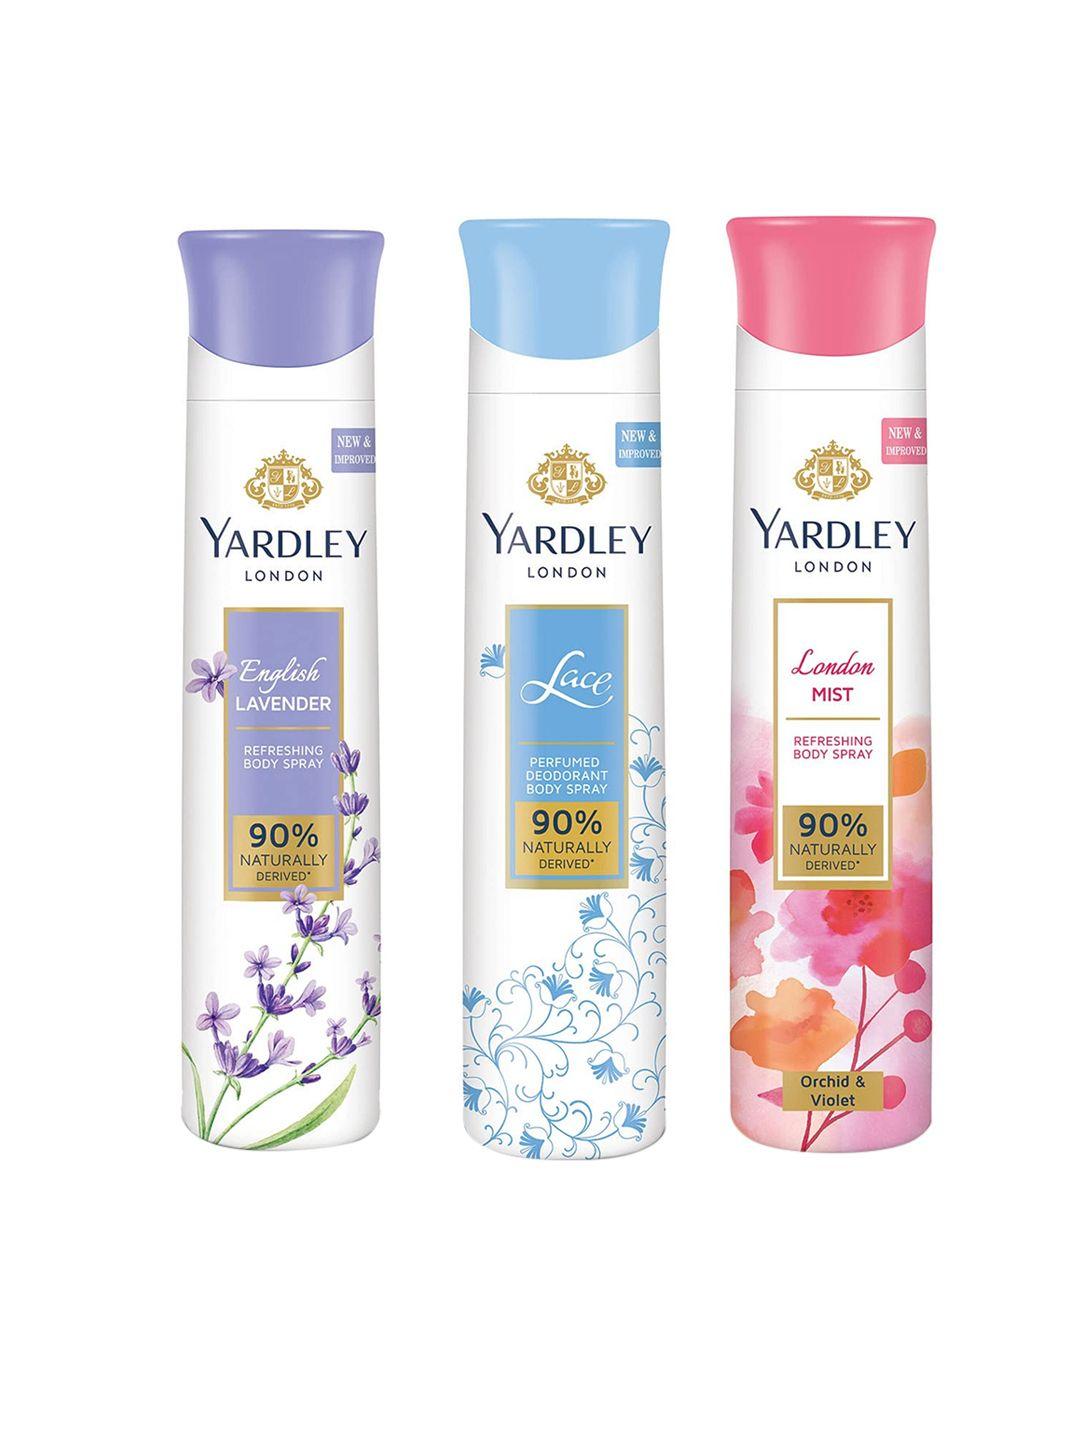 yardley london set of 3 refreshing body spray - english lavender - london mist - lace - 150 ml each